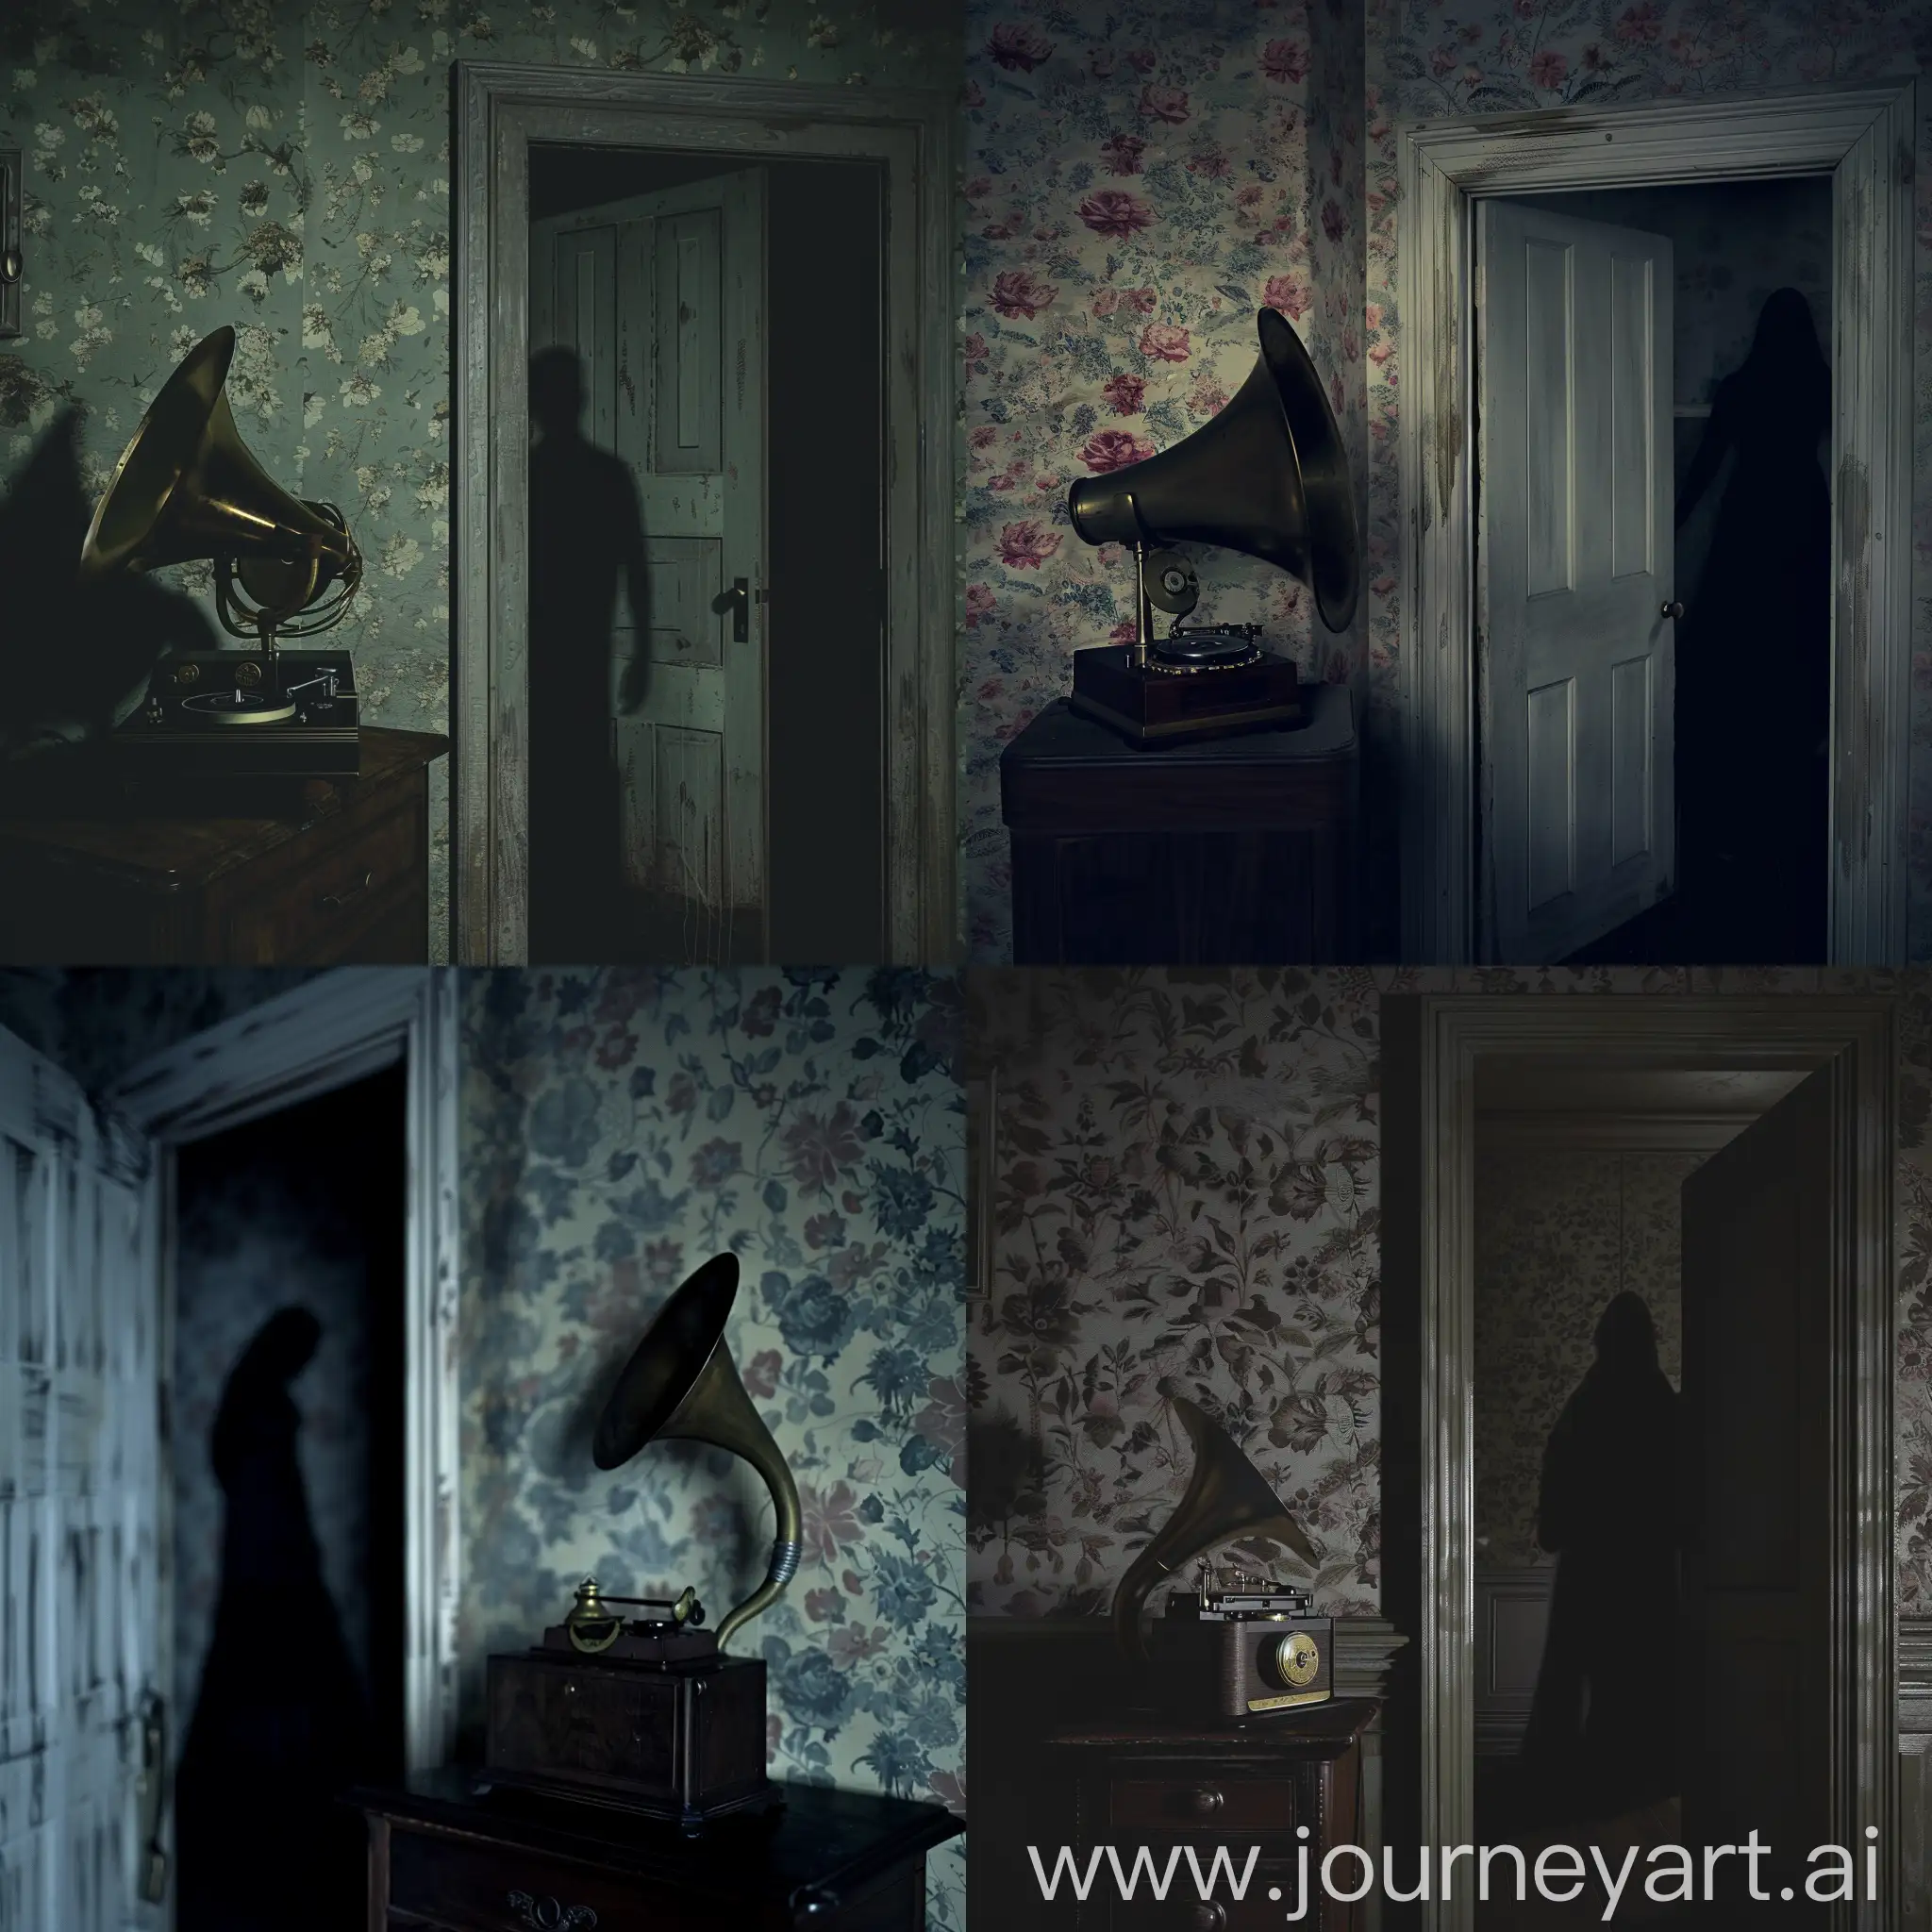 Eerie-Vintage-Nursery-Room-with-Mysterious-Figure-and-Gramophone